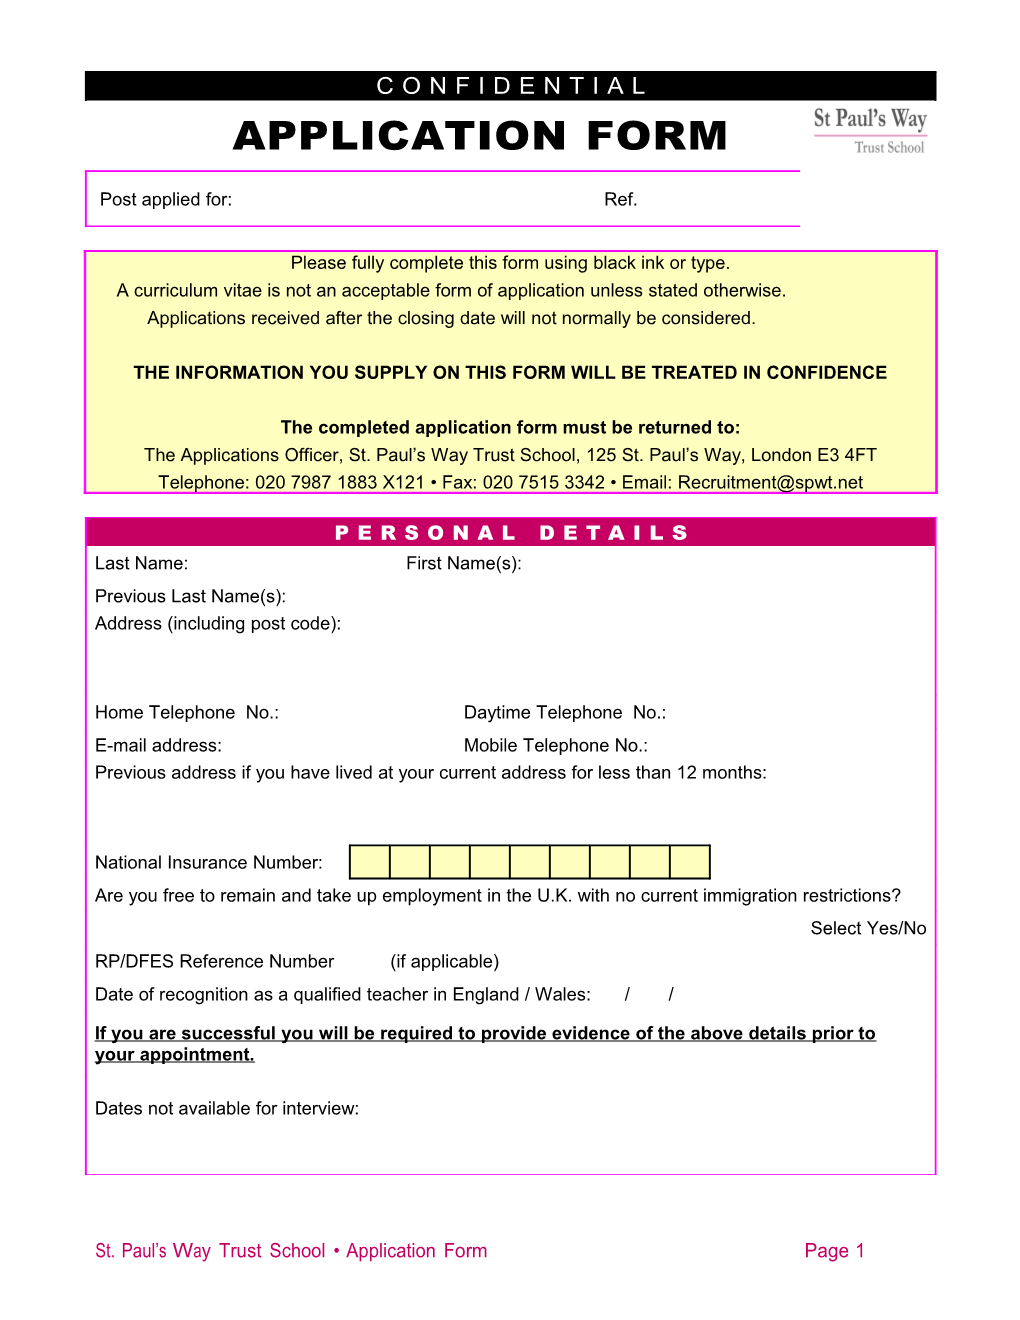 St. Paul S Way Trust School Application Form Page 1